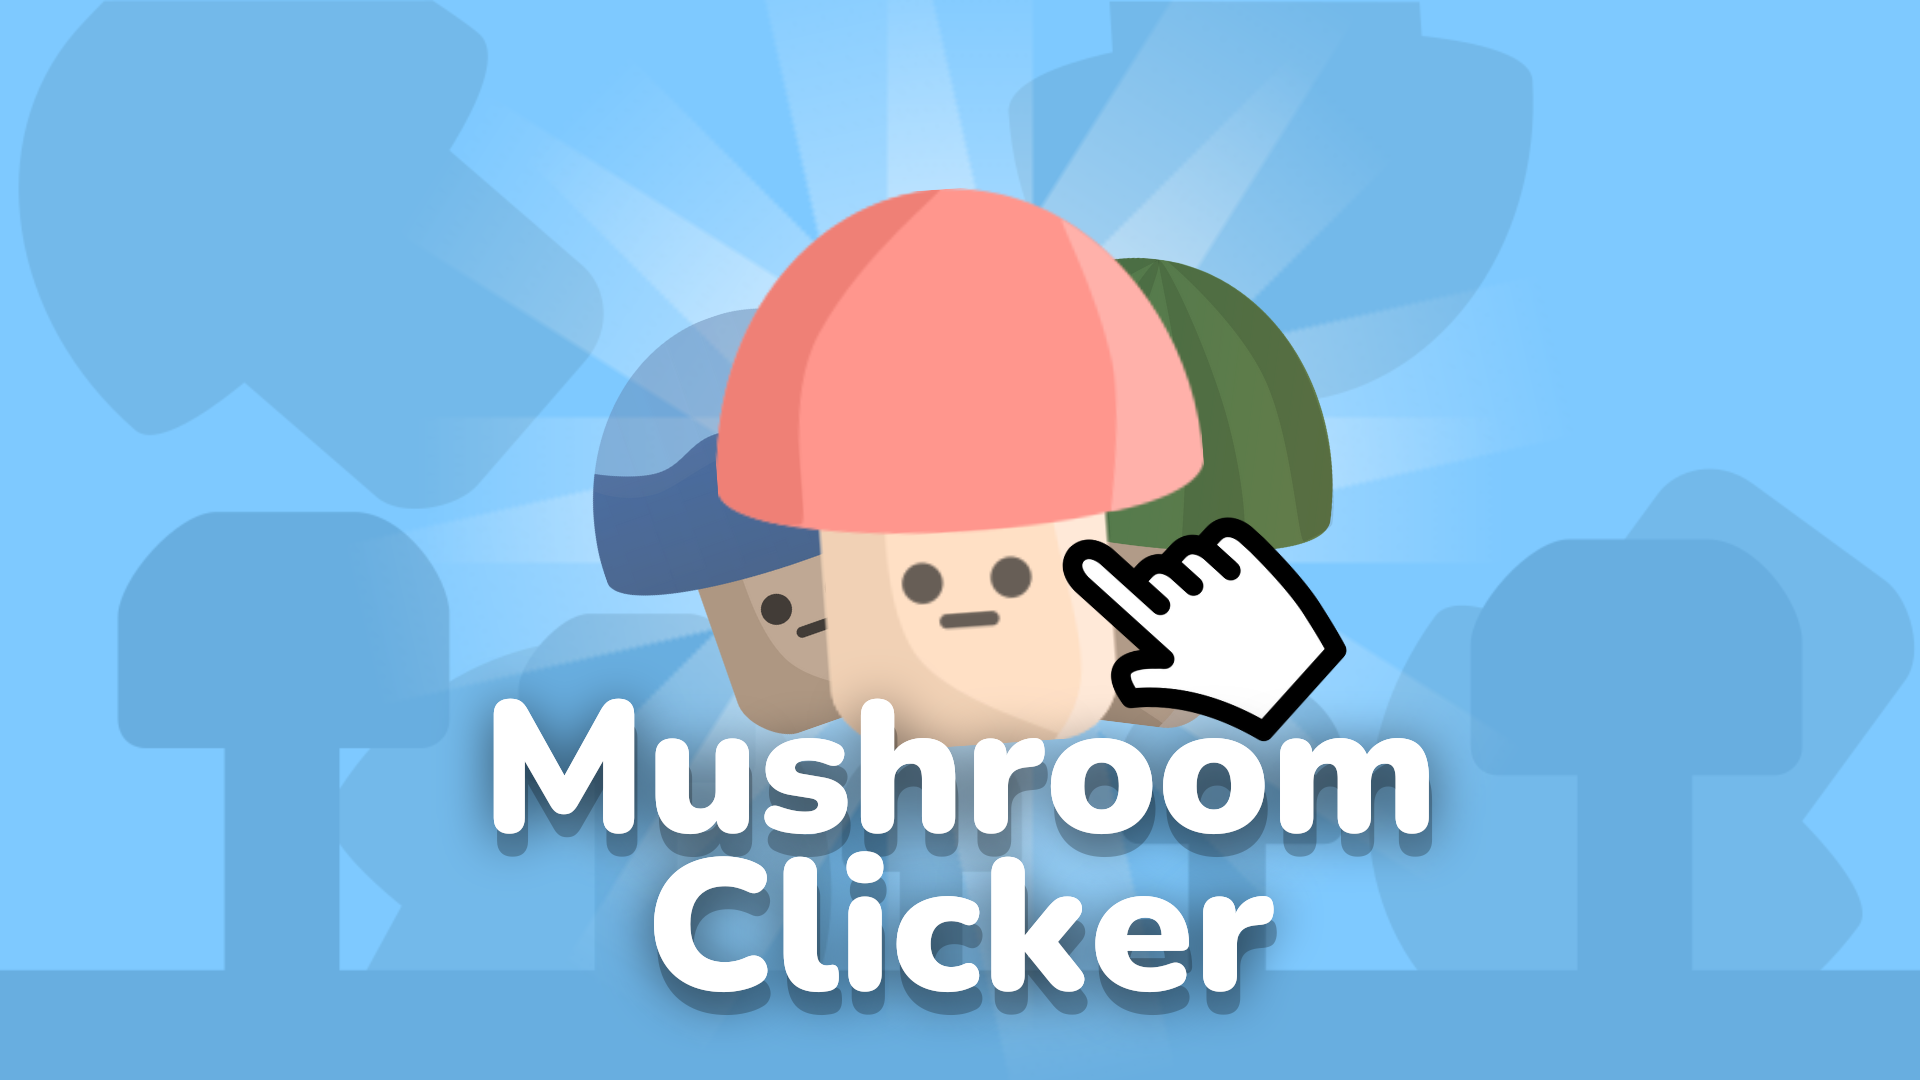 Mushroom Clicker Game Image